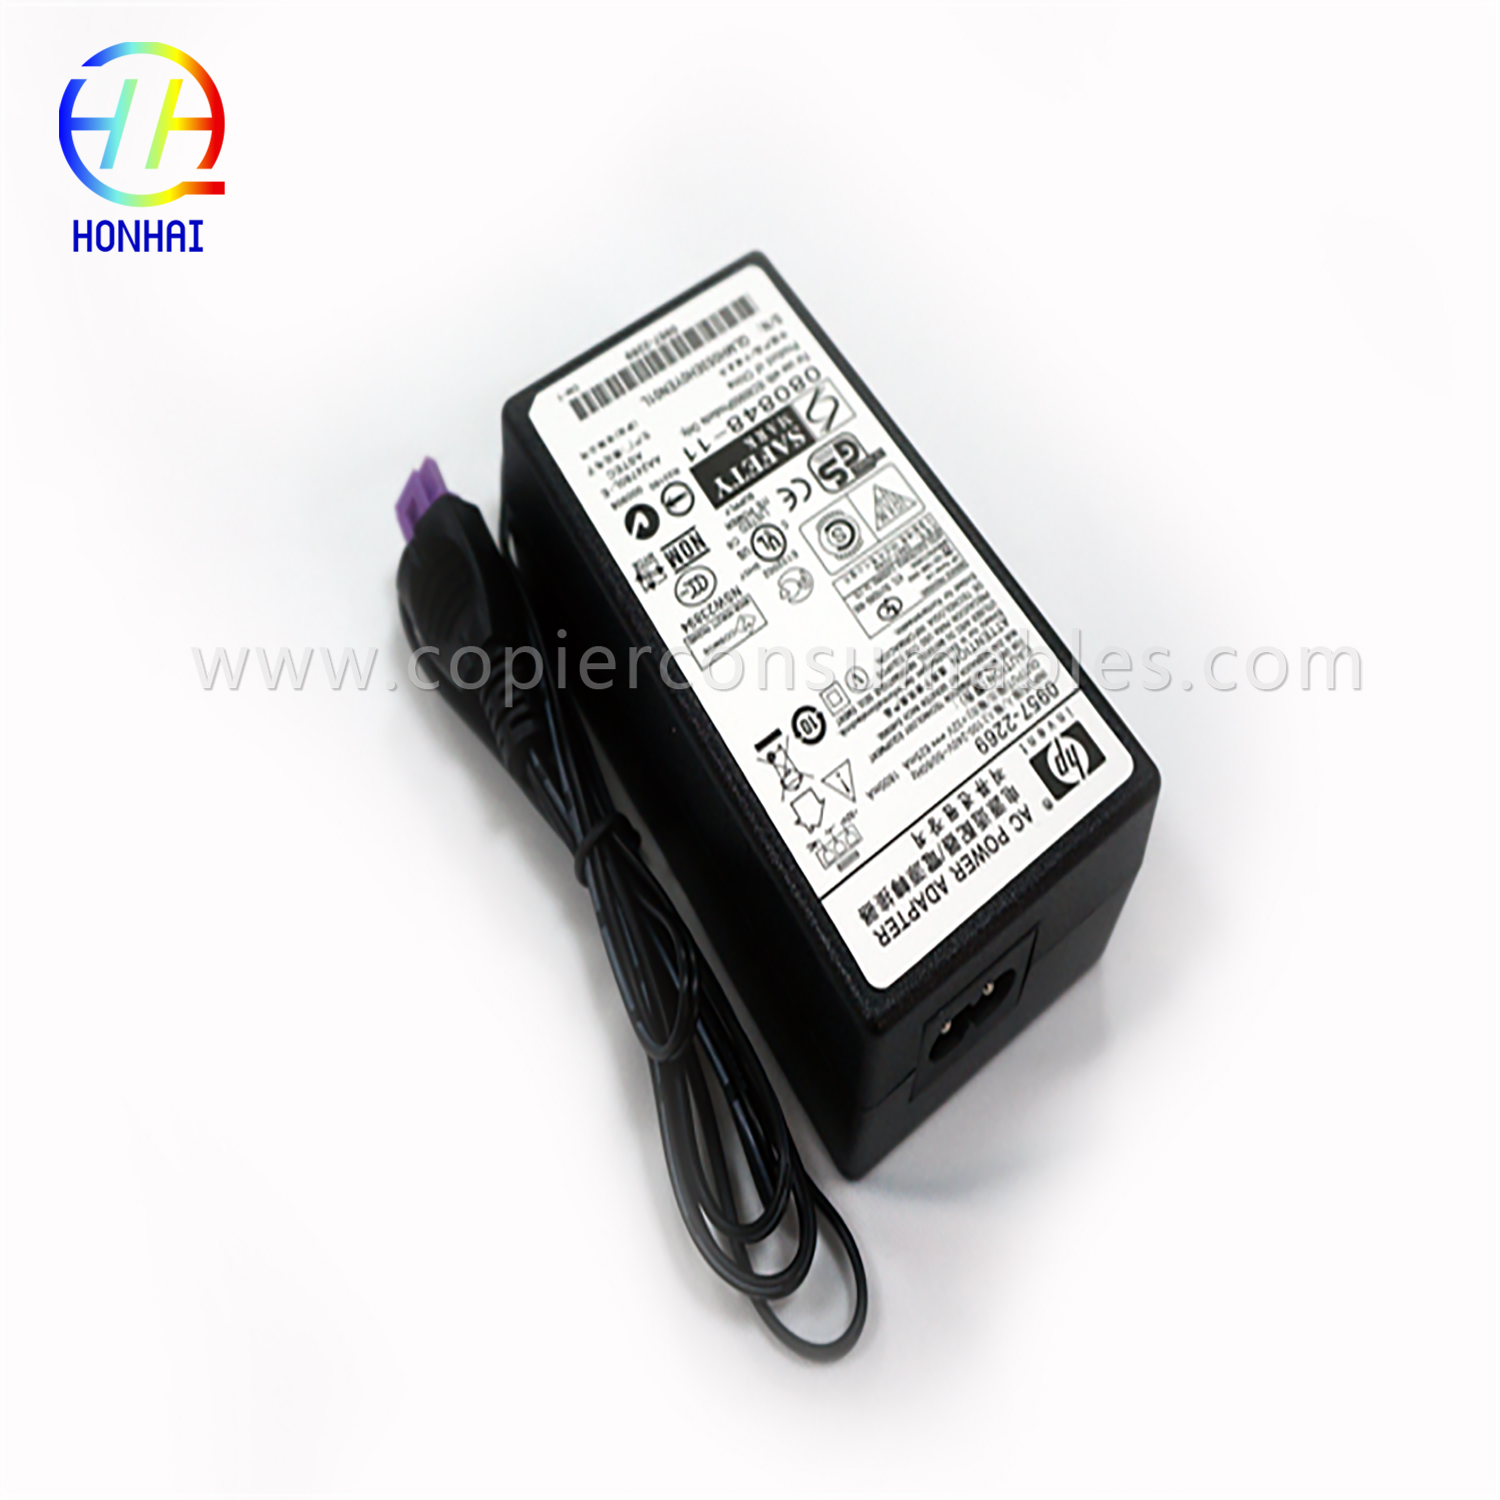 Power Adapter HP 4580 4660 4500 4488-2 拷贝 (2)